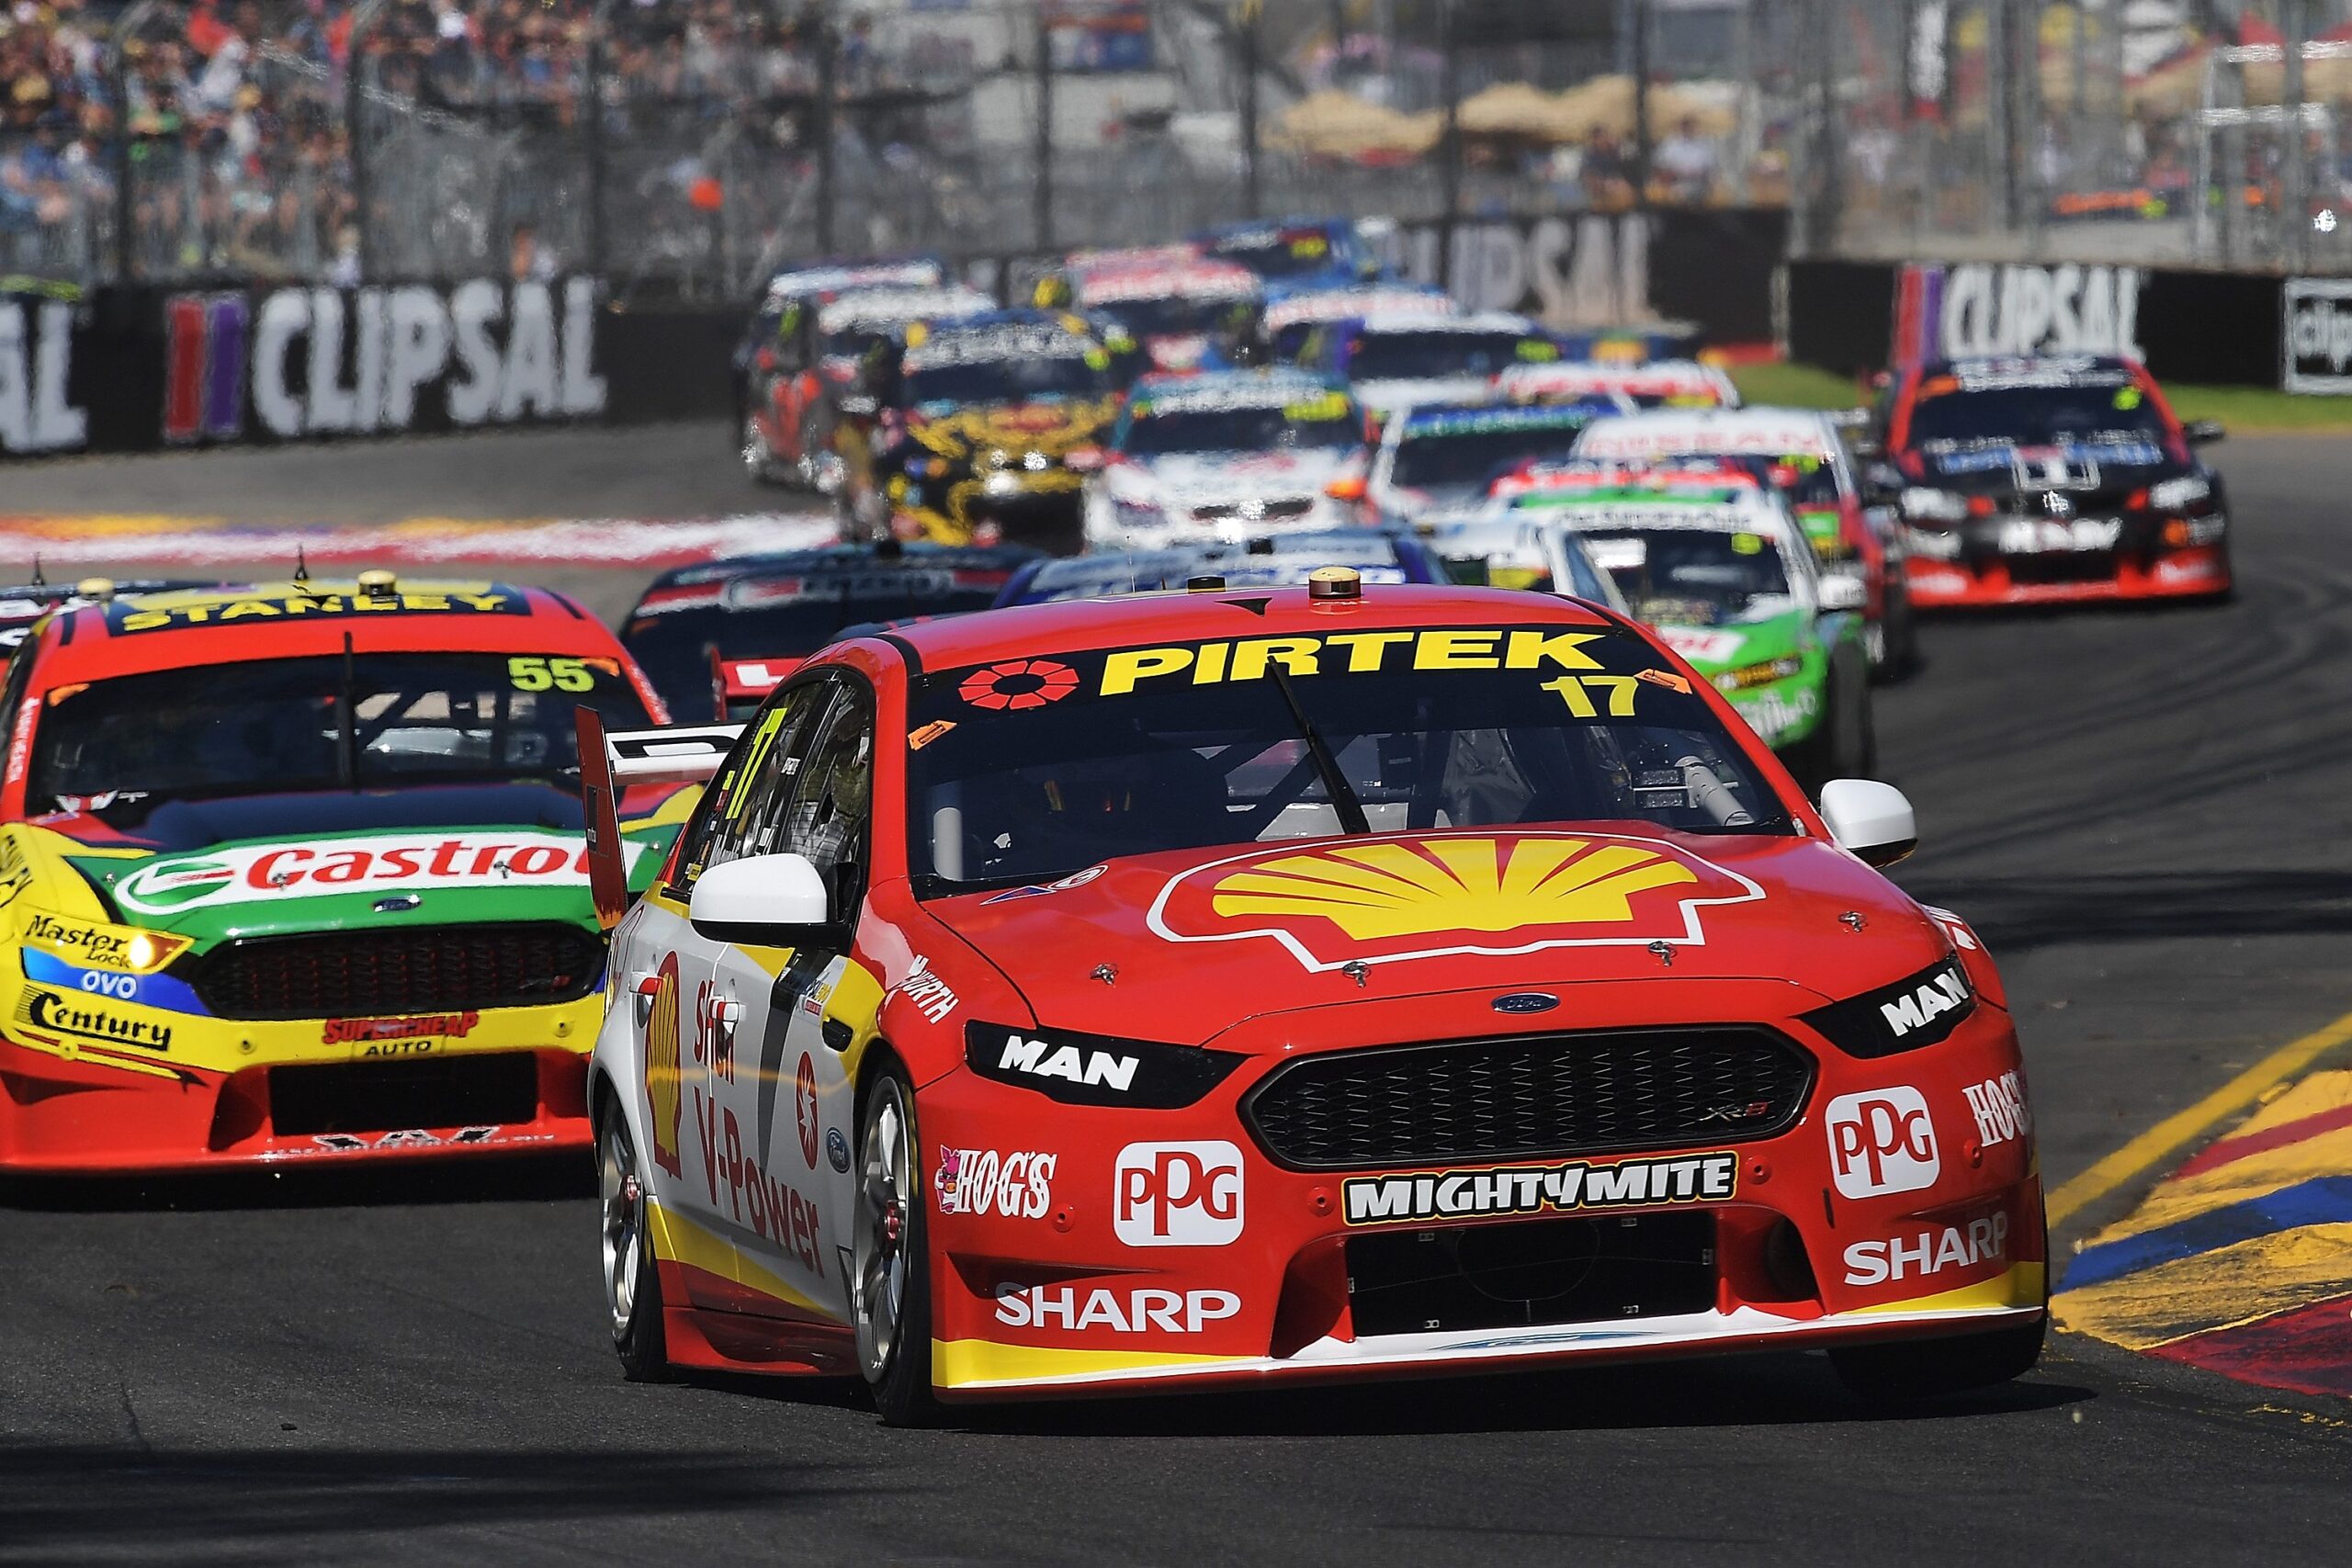 Supercars – Clipsal 500 Adelaide: Top 10 Shootout & Race 2